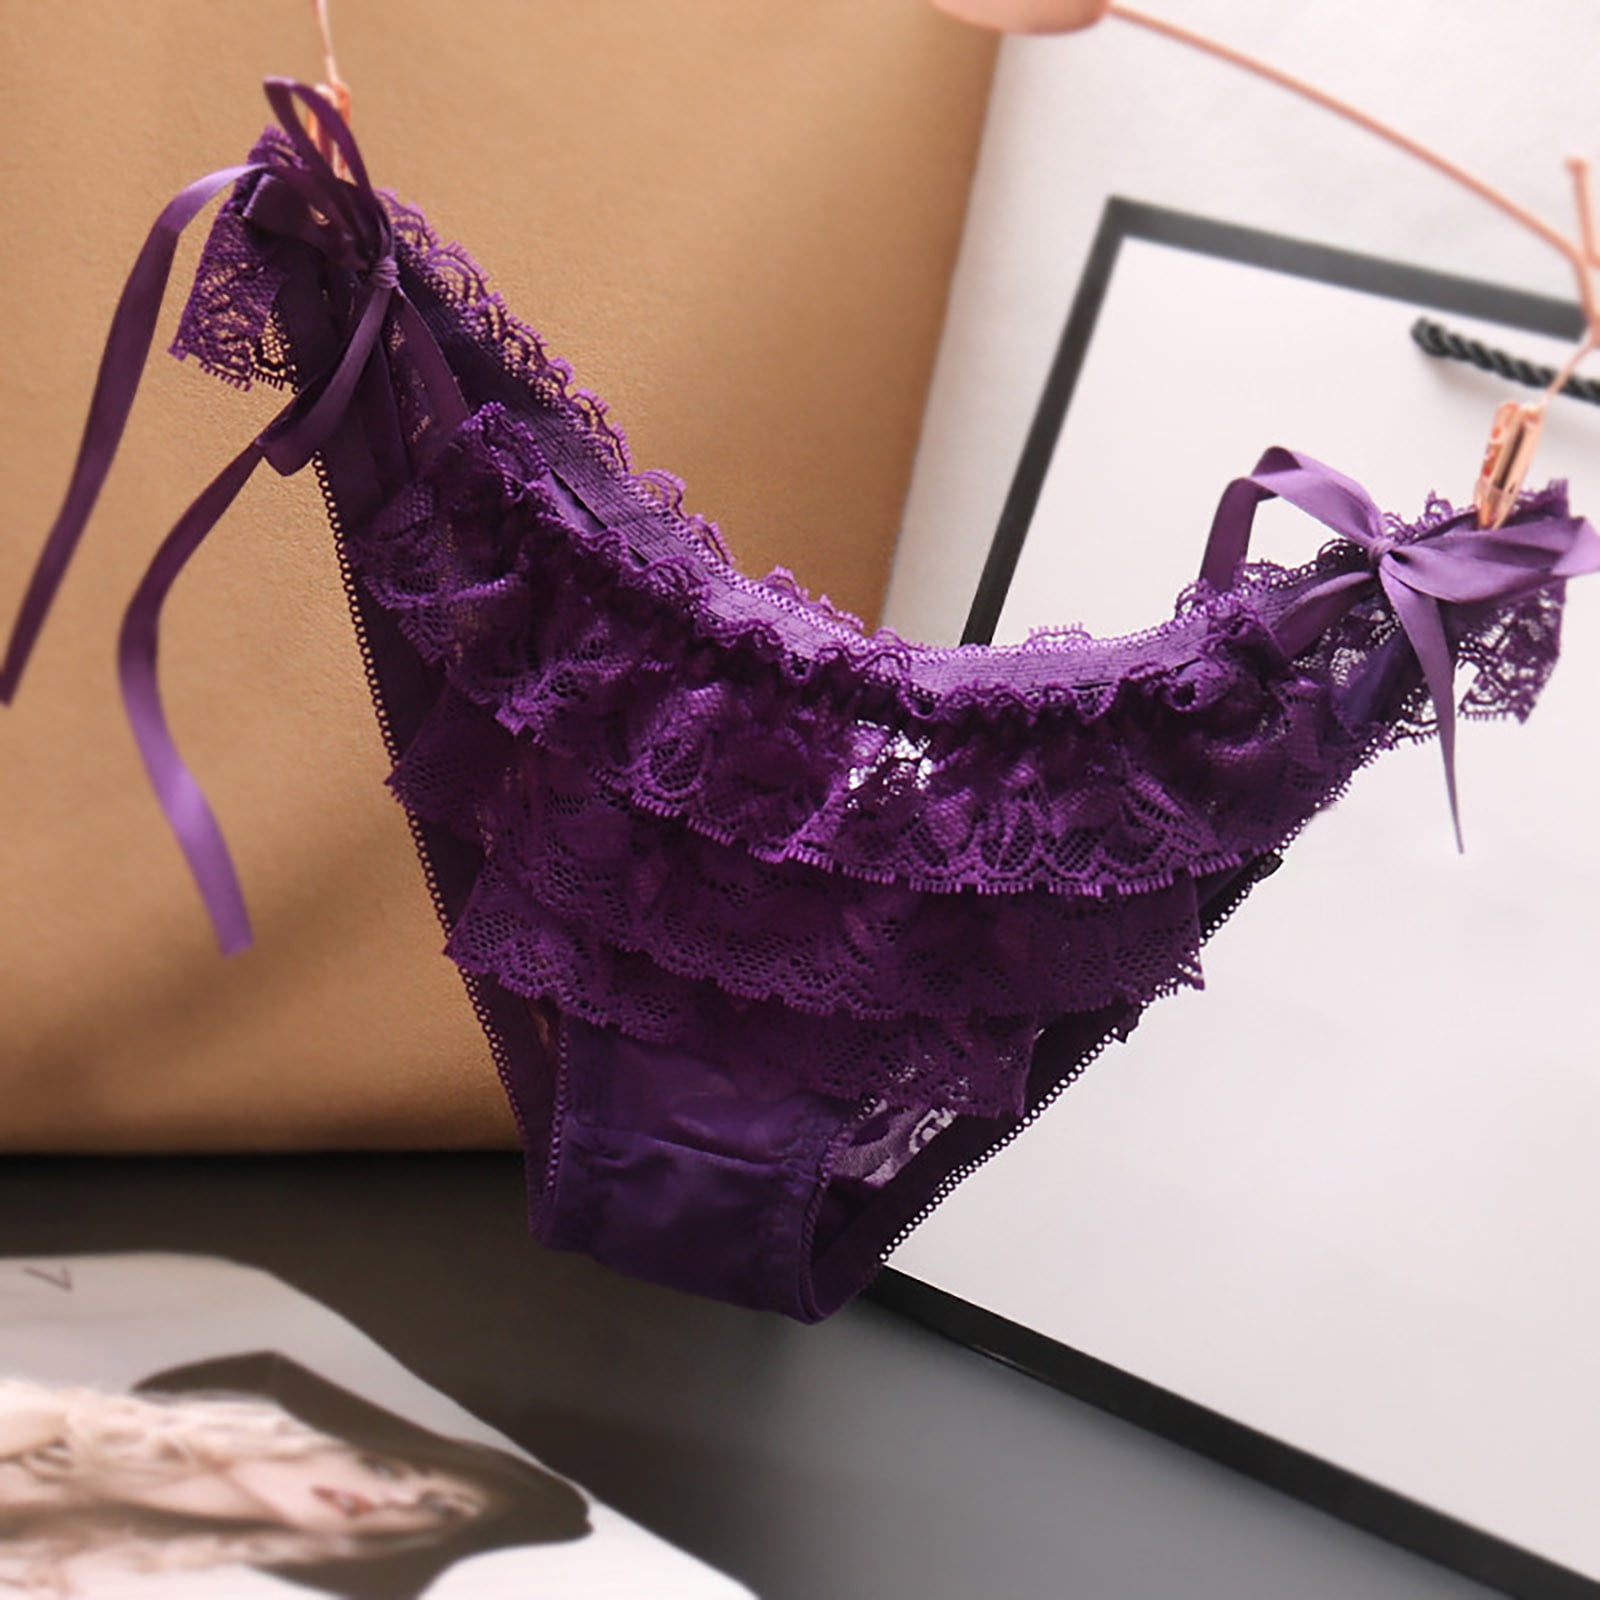 Winter Savings Clearance! Suokom Women Lace Underwear Lingerie Thongs Panties  Ladies Underwear Underpants Gifts for Women 